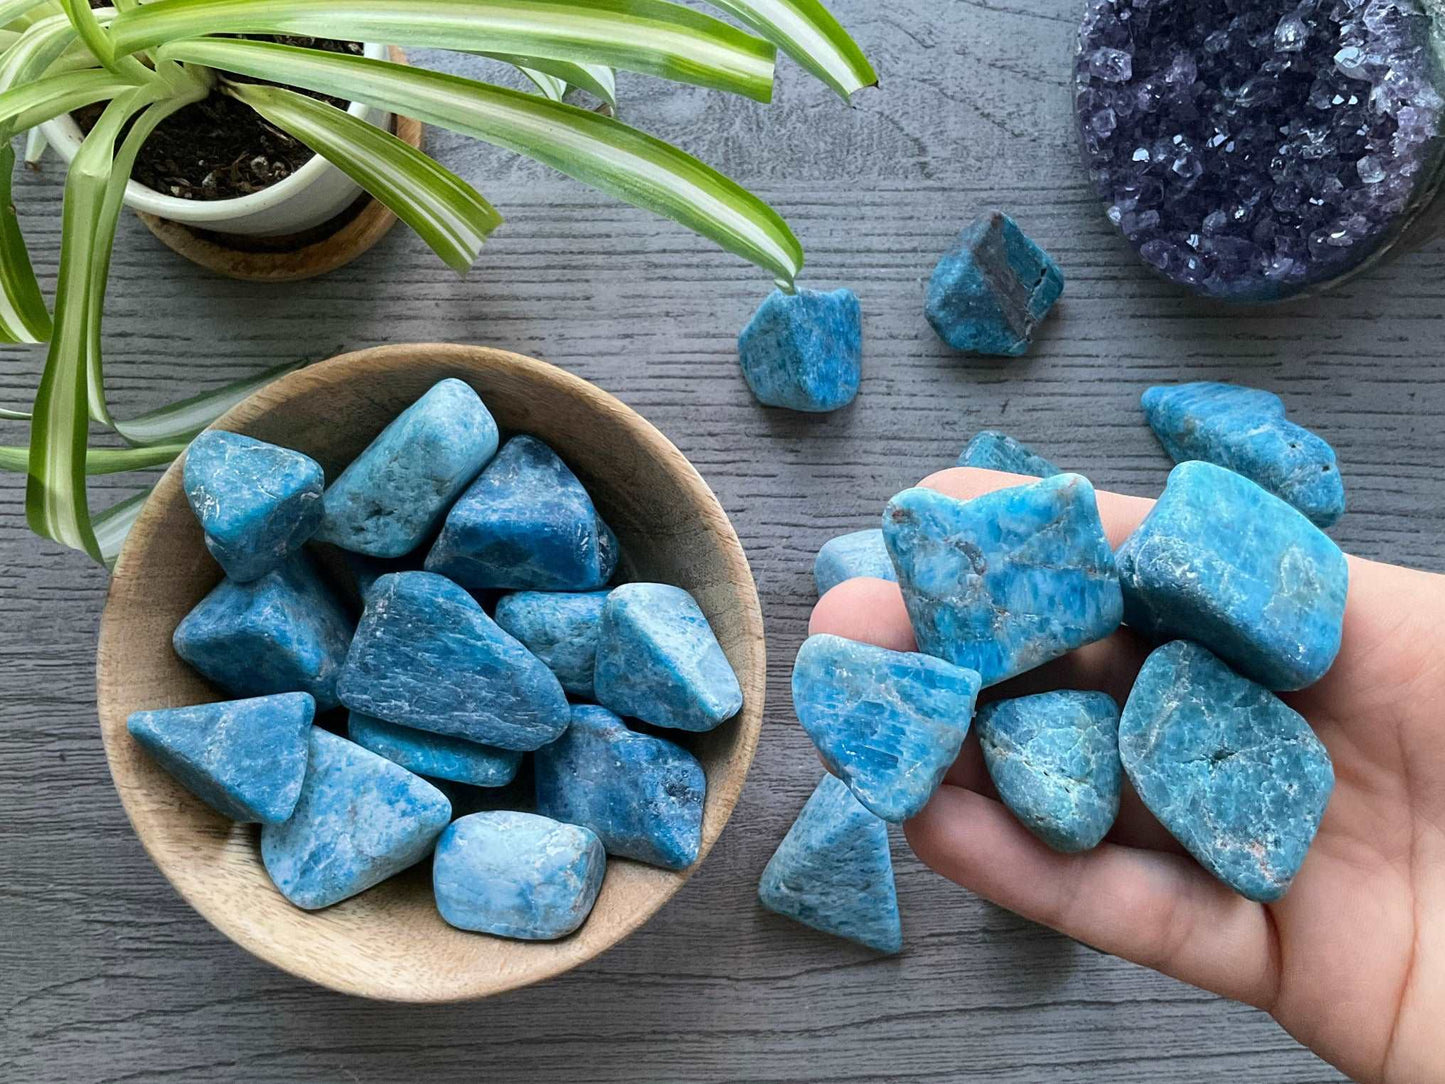 Pictured are various blue apatite tumbled stones.